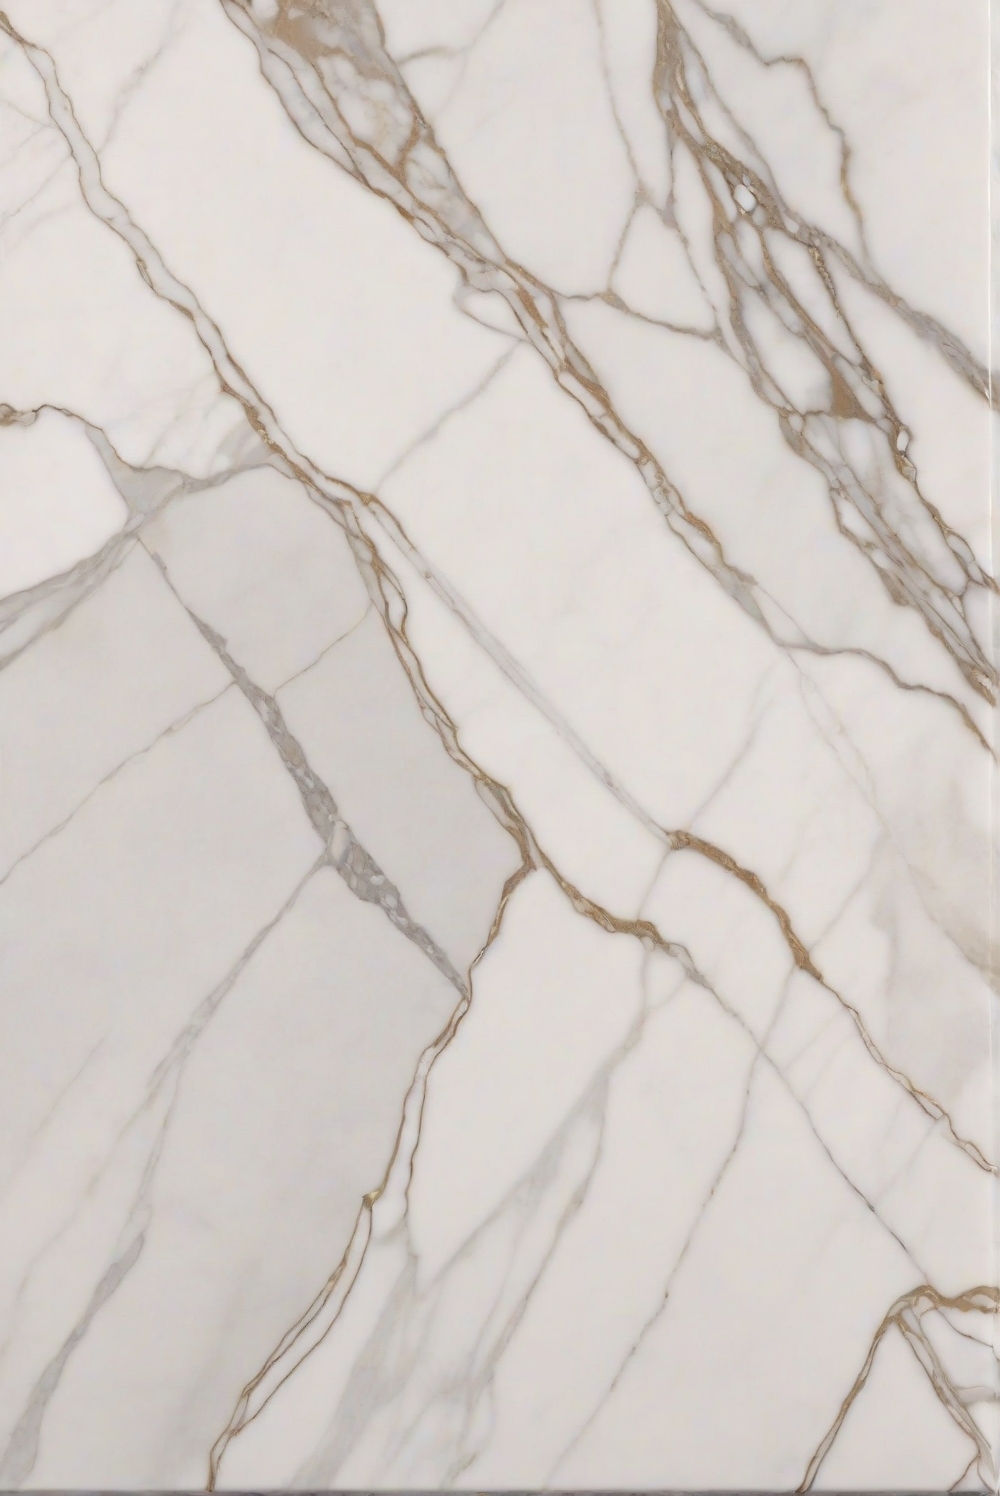 Calacatta marble countertops, kitchen countertop design, luxury countertop options, elegant countertop selection, countertop materials, modern countertop trends, high-end countertop surfaces